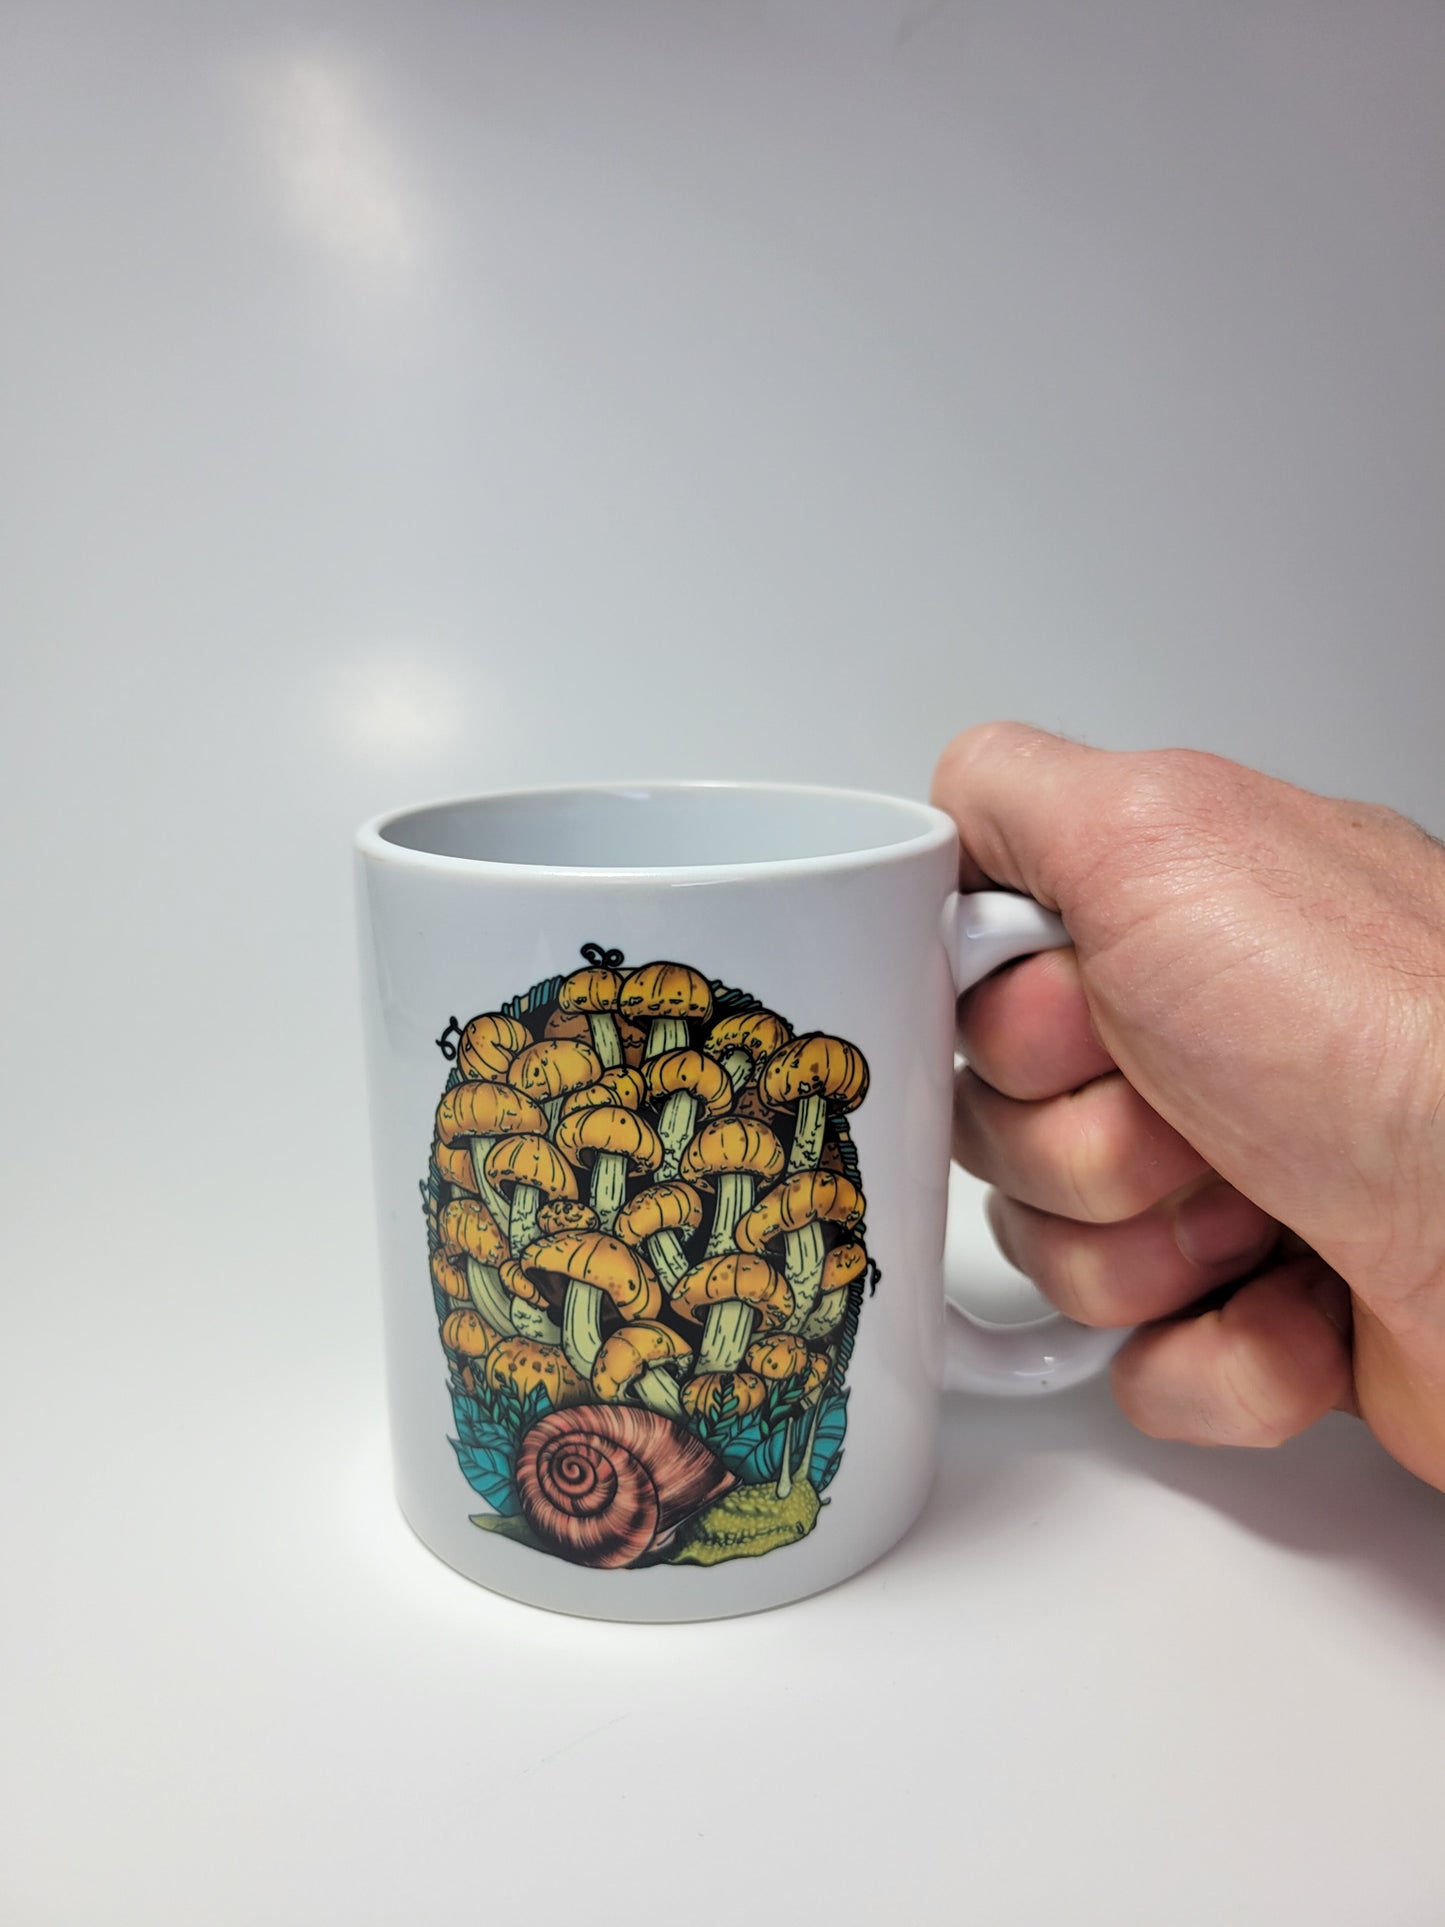 Land Snail and Chestnut Mushrooms Coffee Mug | Cottagecore Artwork on Ceramic Cup | 11oz/15oz Sizes